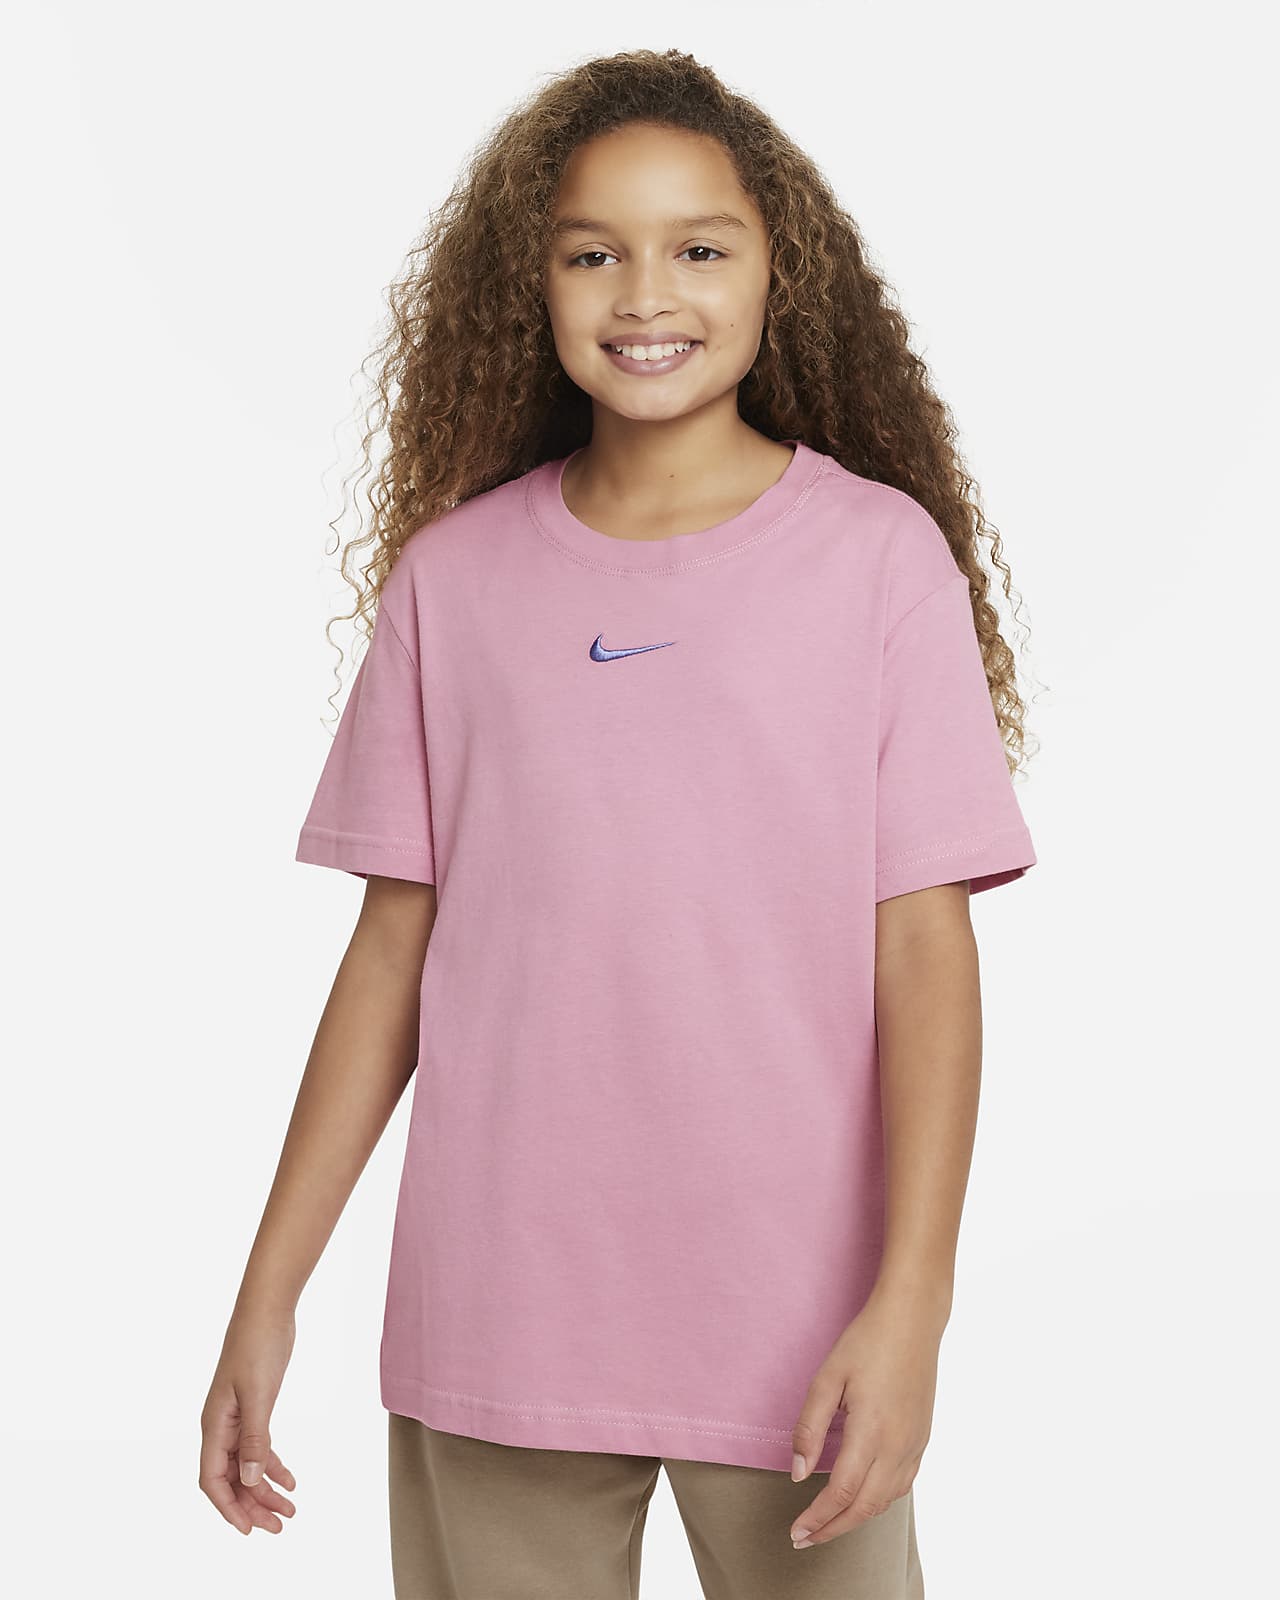 Nike Sportswear Kids' (Girls') T-Shirt. Nike.com